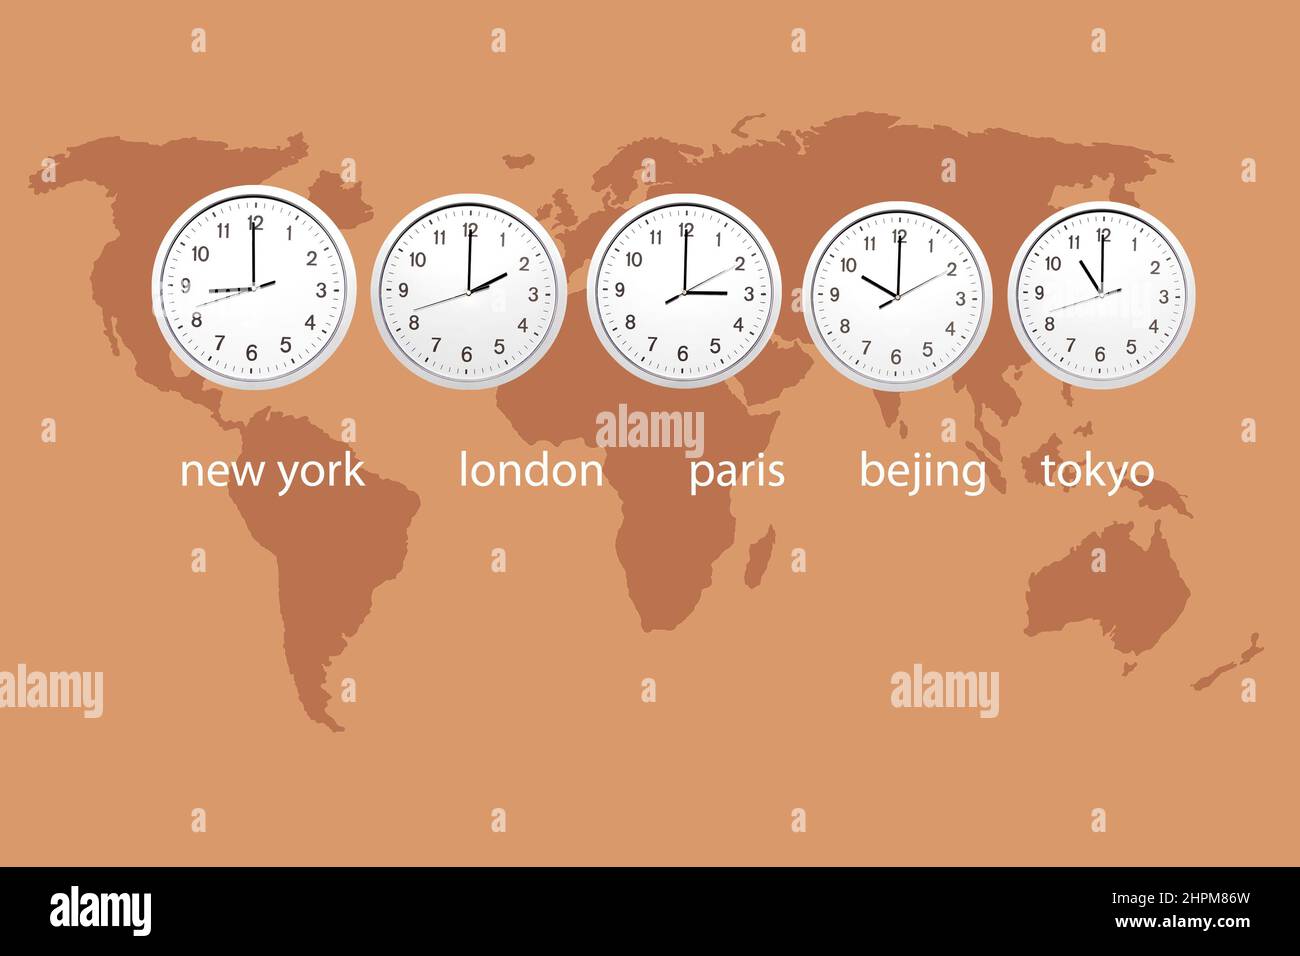 Orologi da parete con diversi fusi orari per Londra, New York, Parigi,  Bejing, Tokyo Foto stock - Alamy